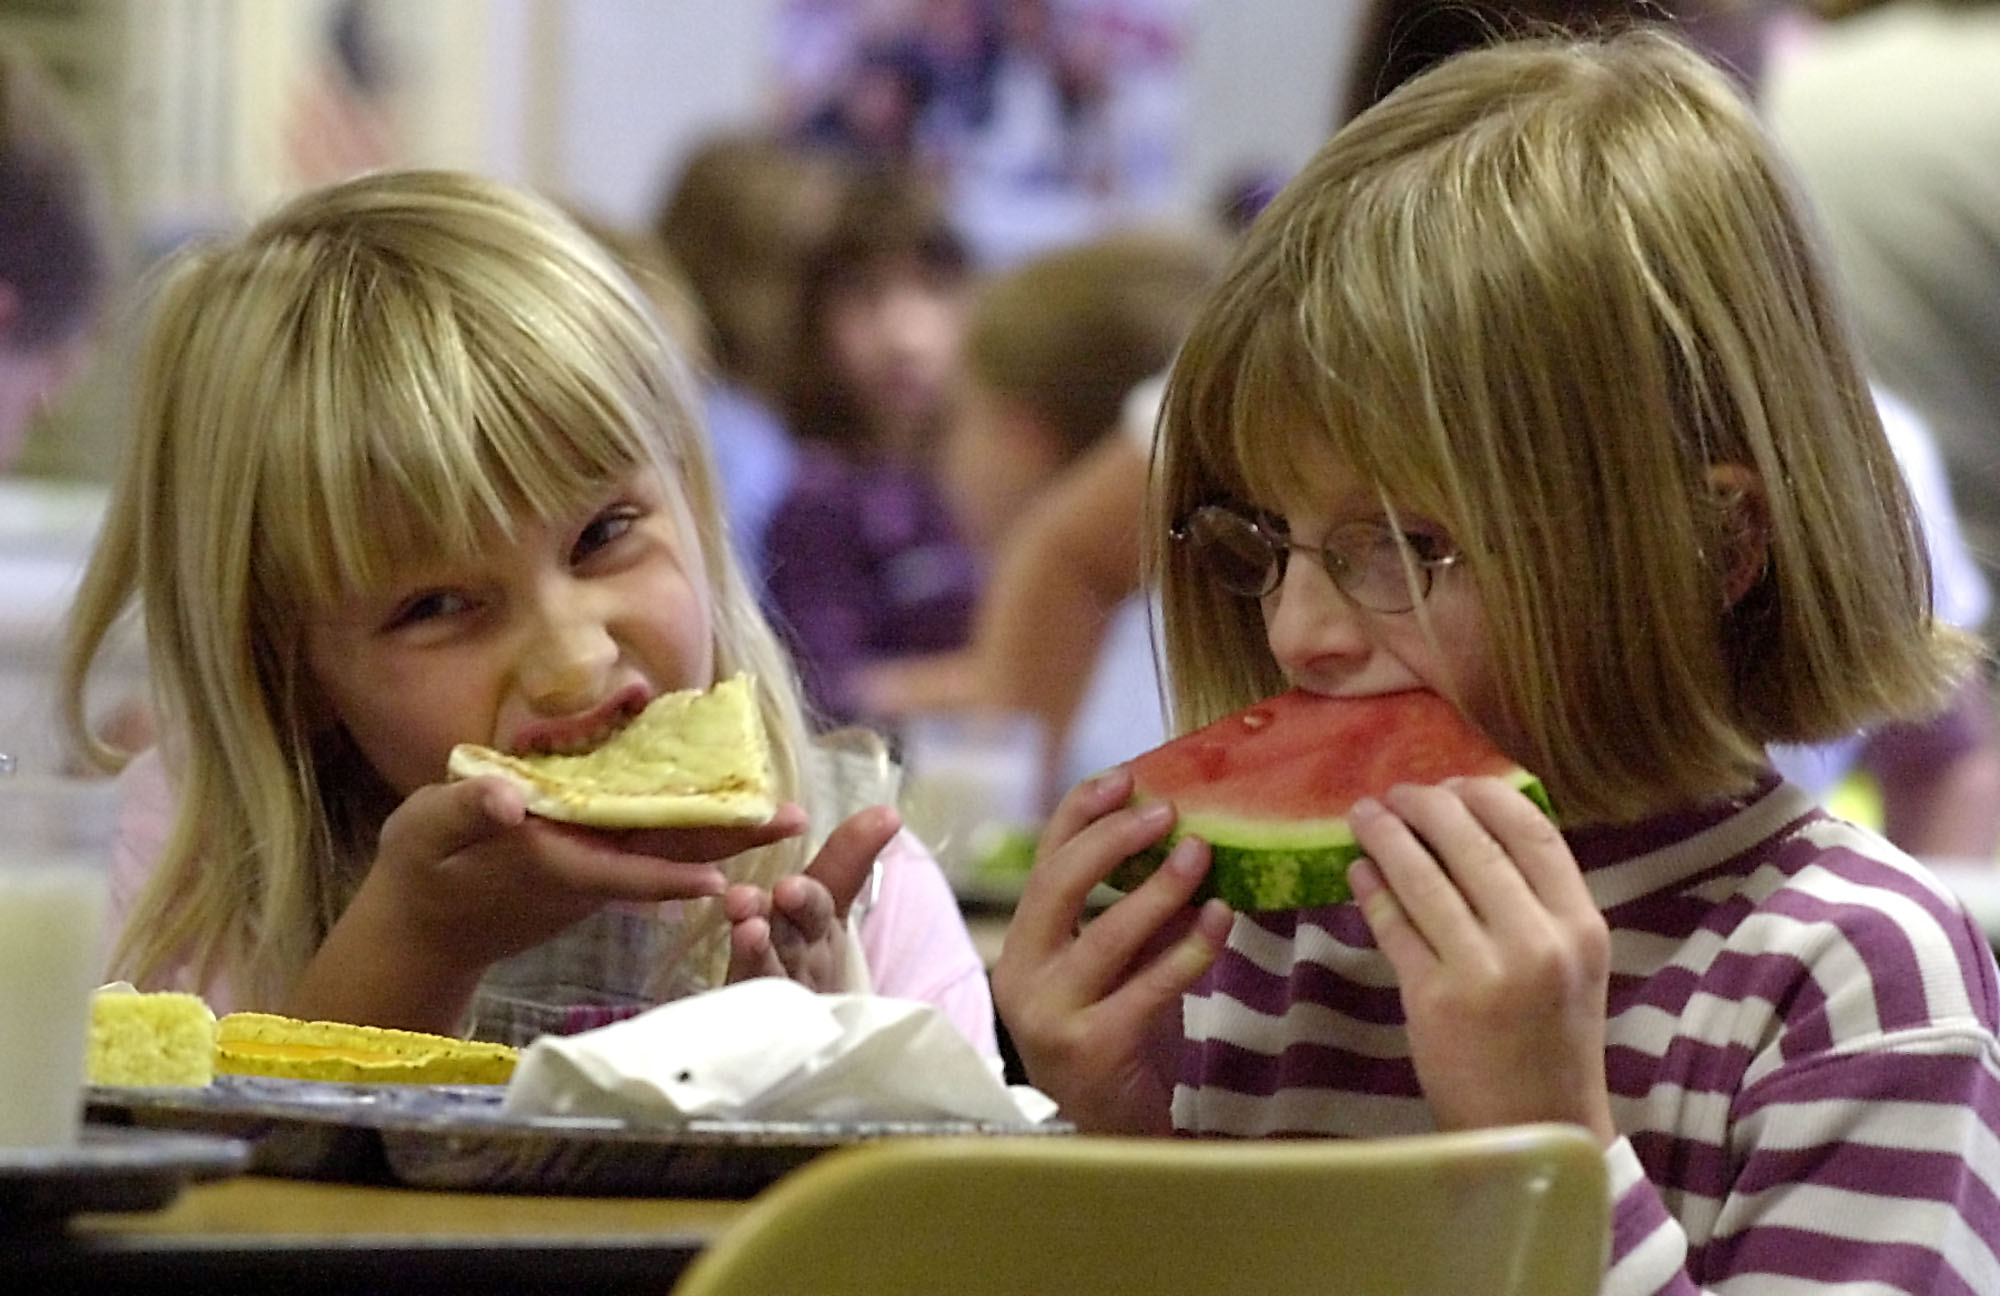 Kayla Reynolds, 6, left, and Kirsten Desorda, 7, eat lunch at school